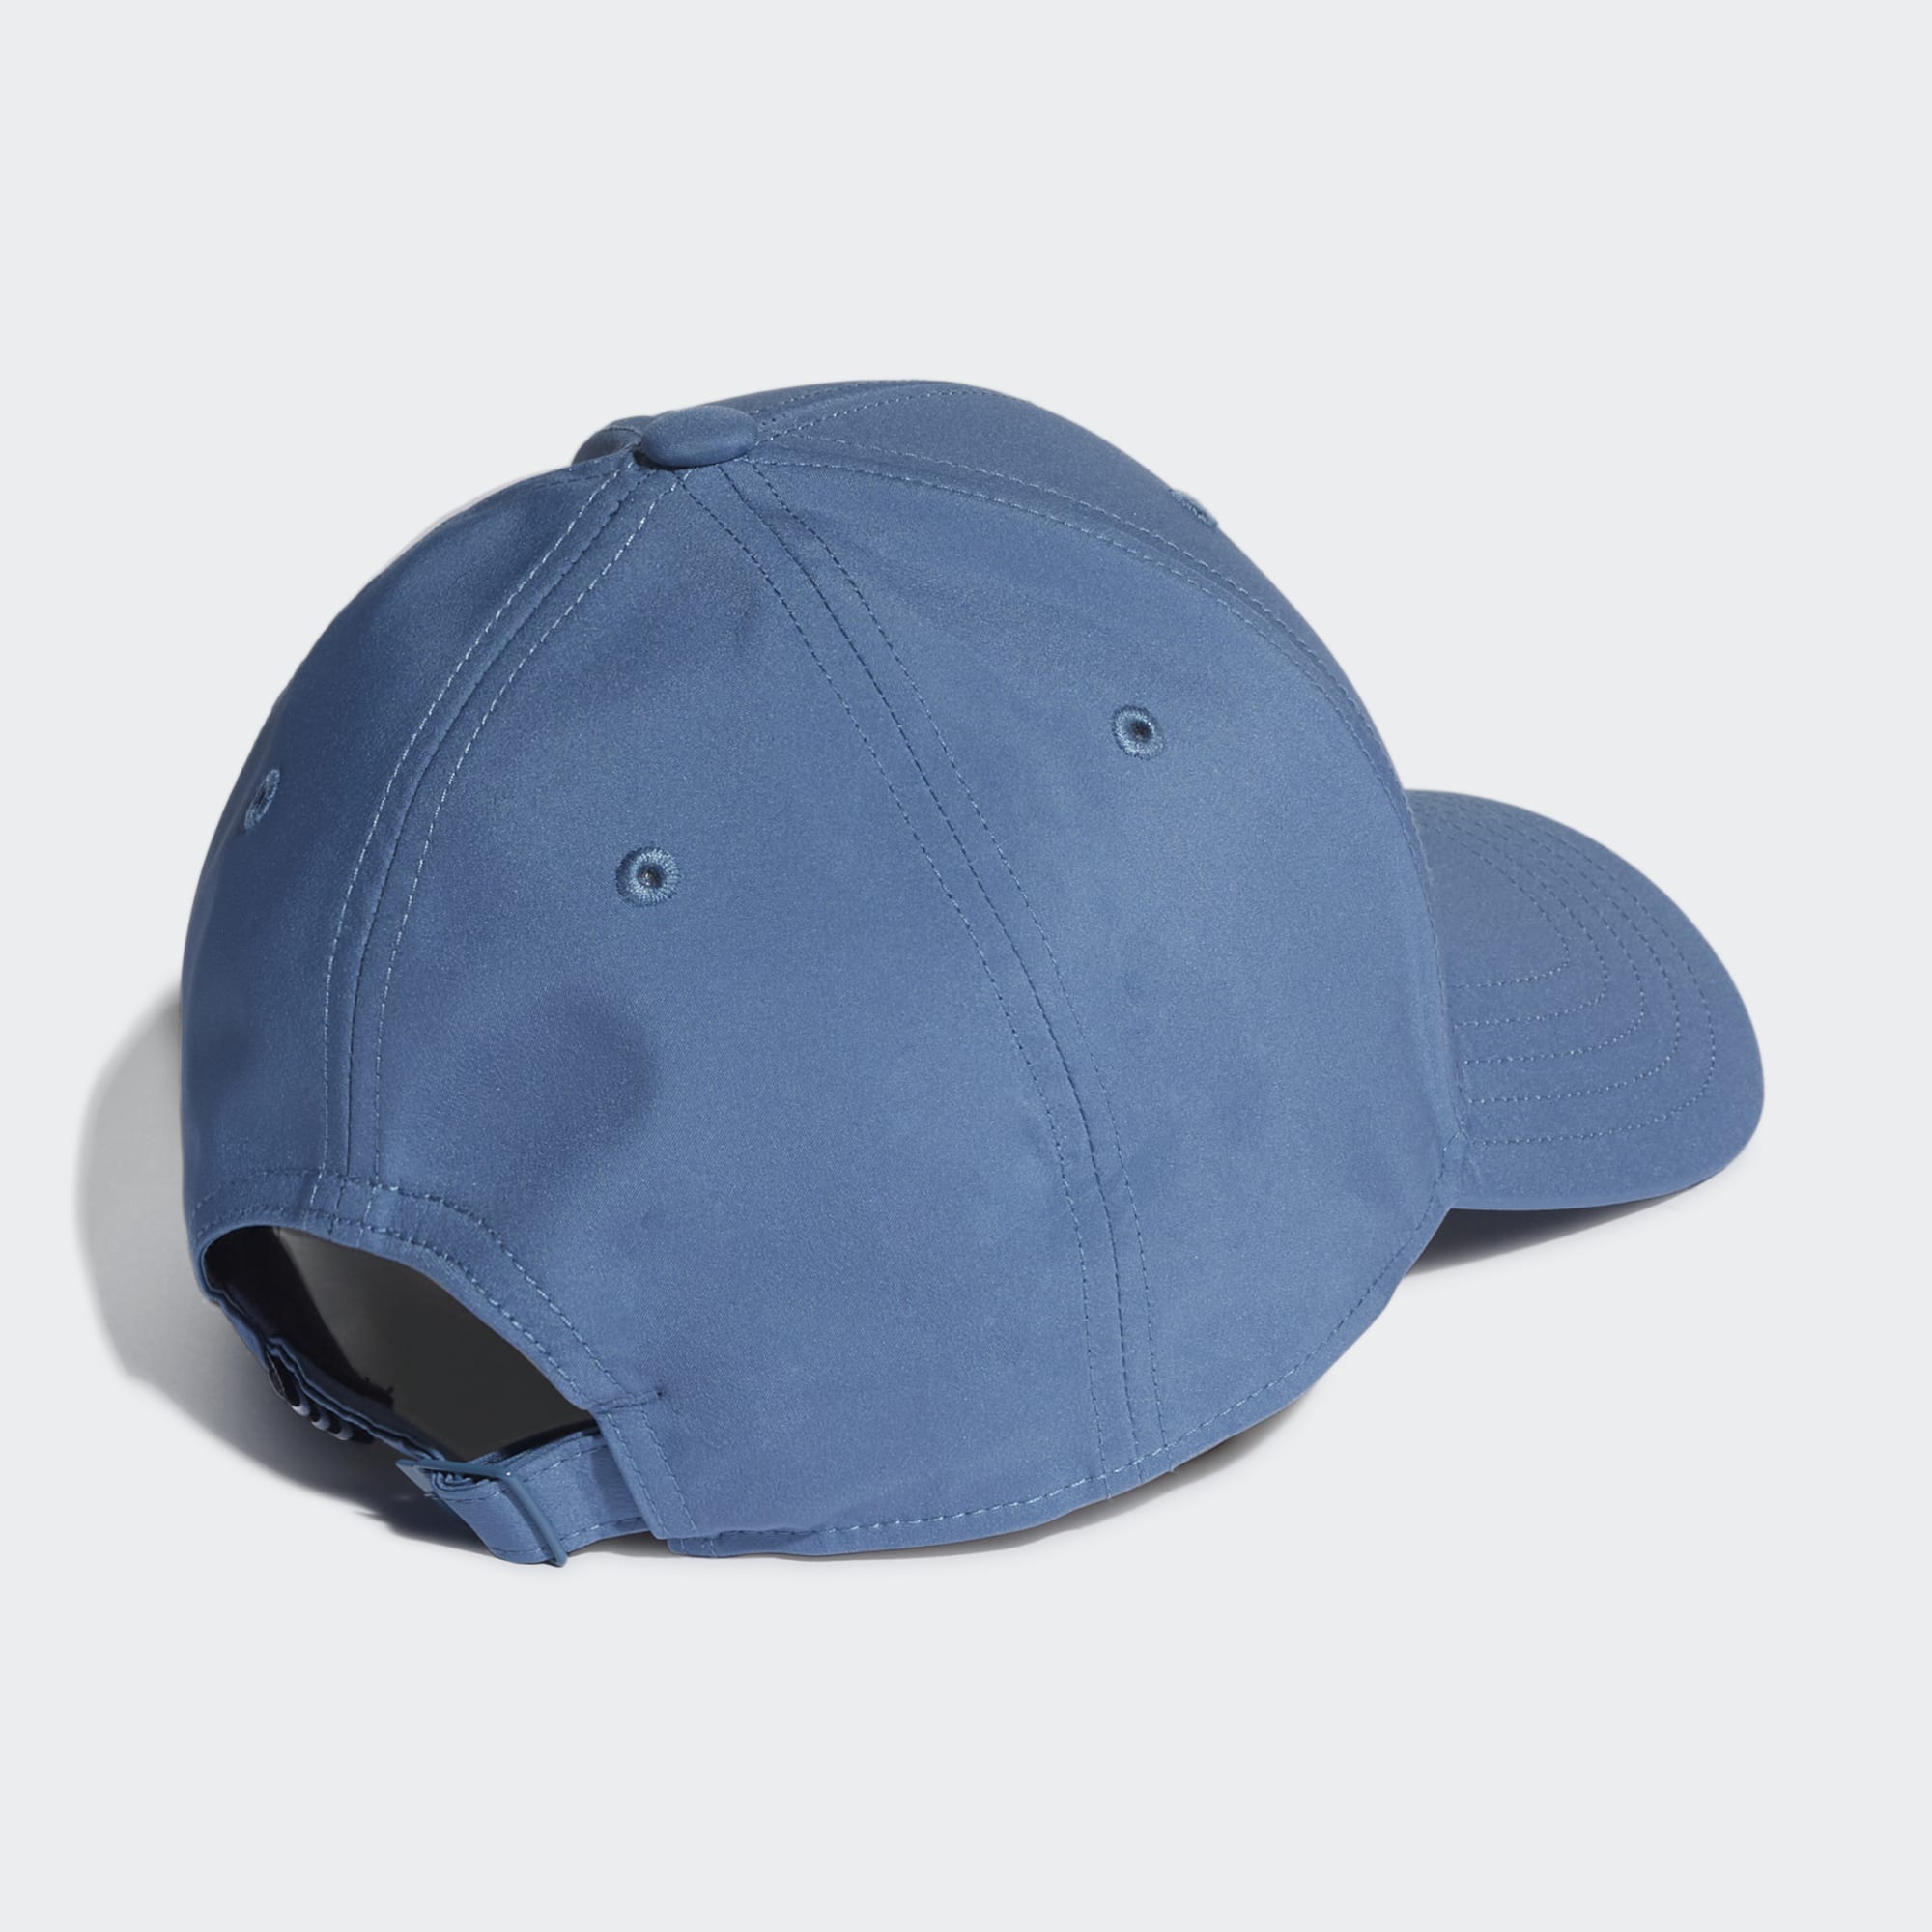 Adidas Baseball Cap (Blau)